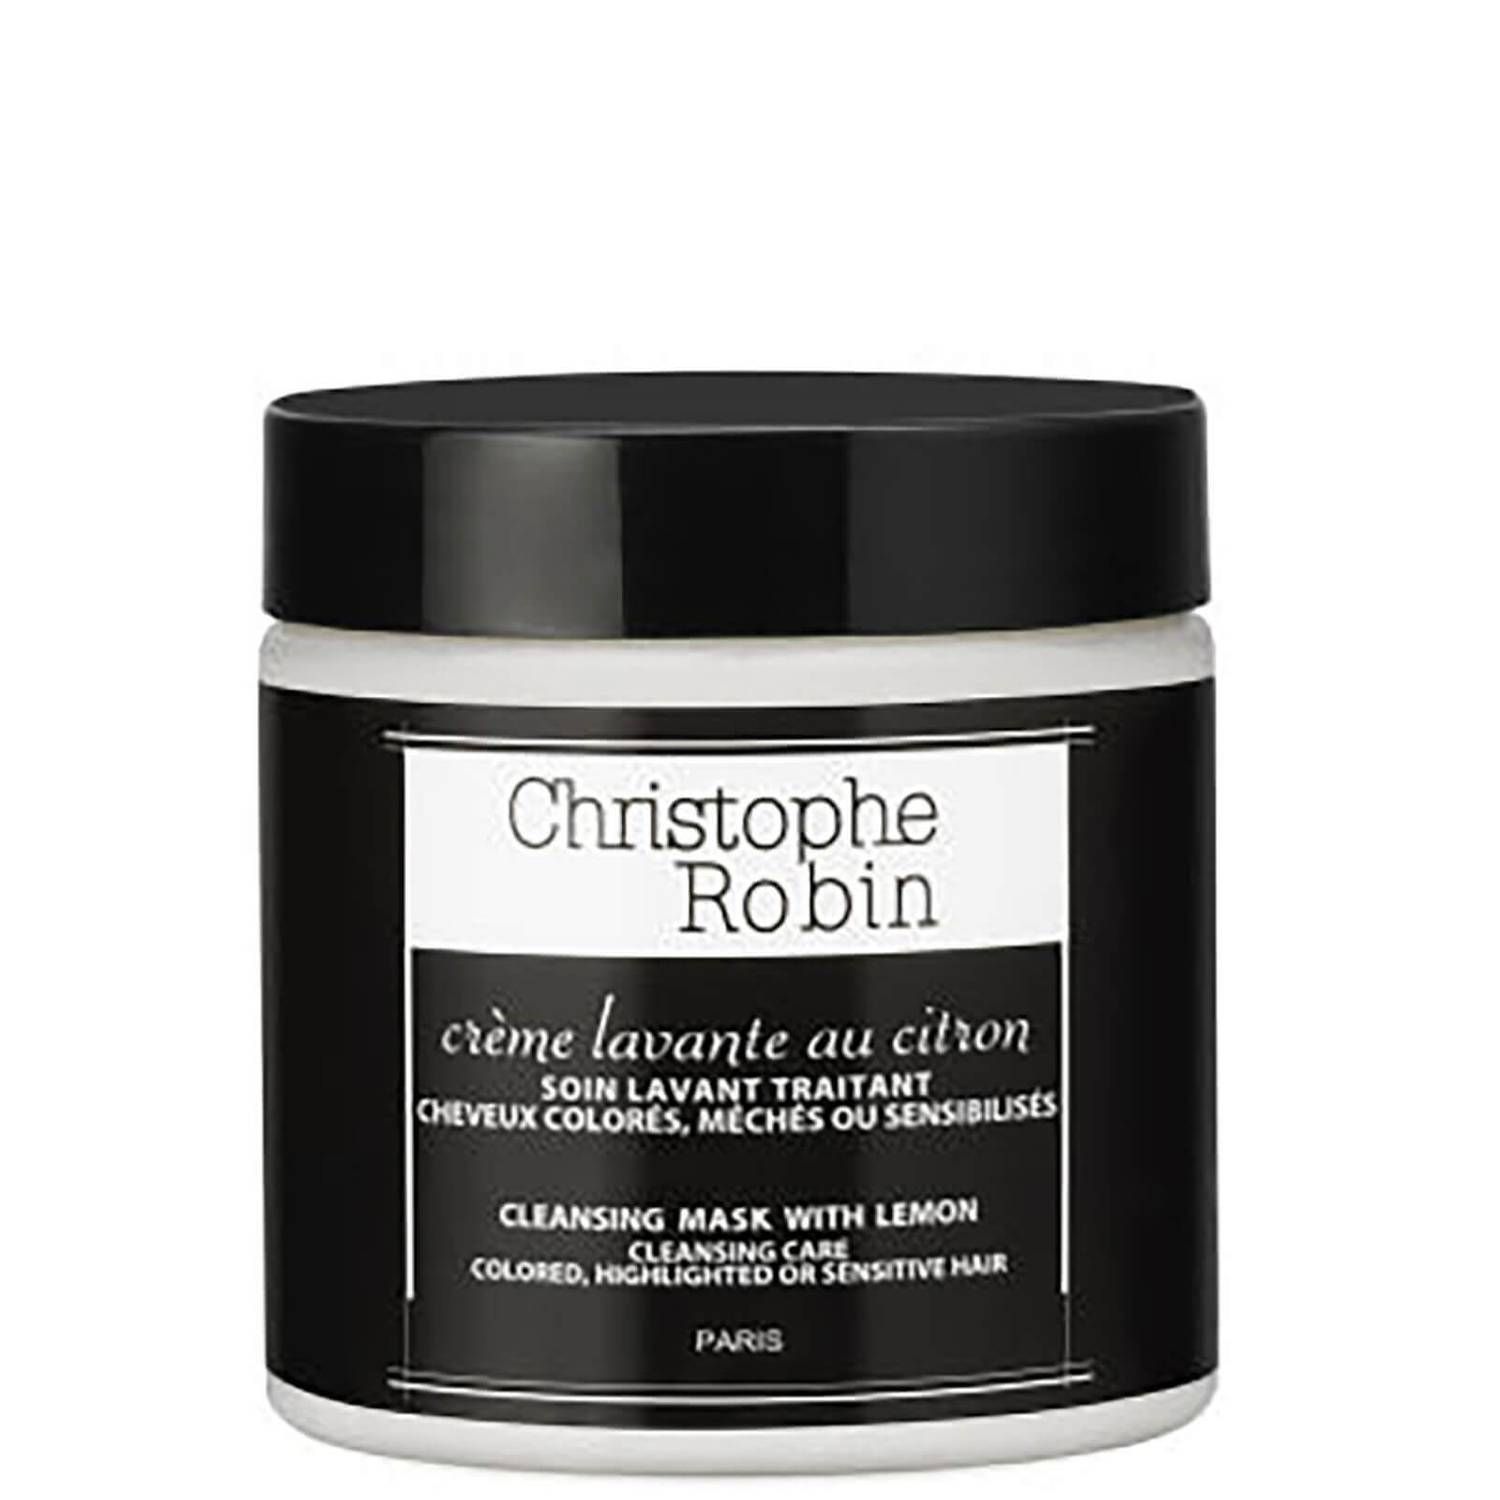 Christophe Robin Cleansing Mask with Lemon (8.33 fl. oz.)